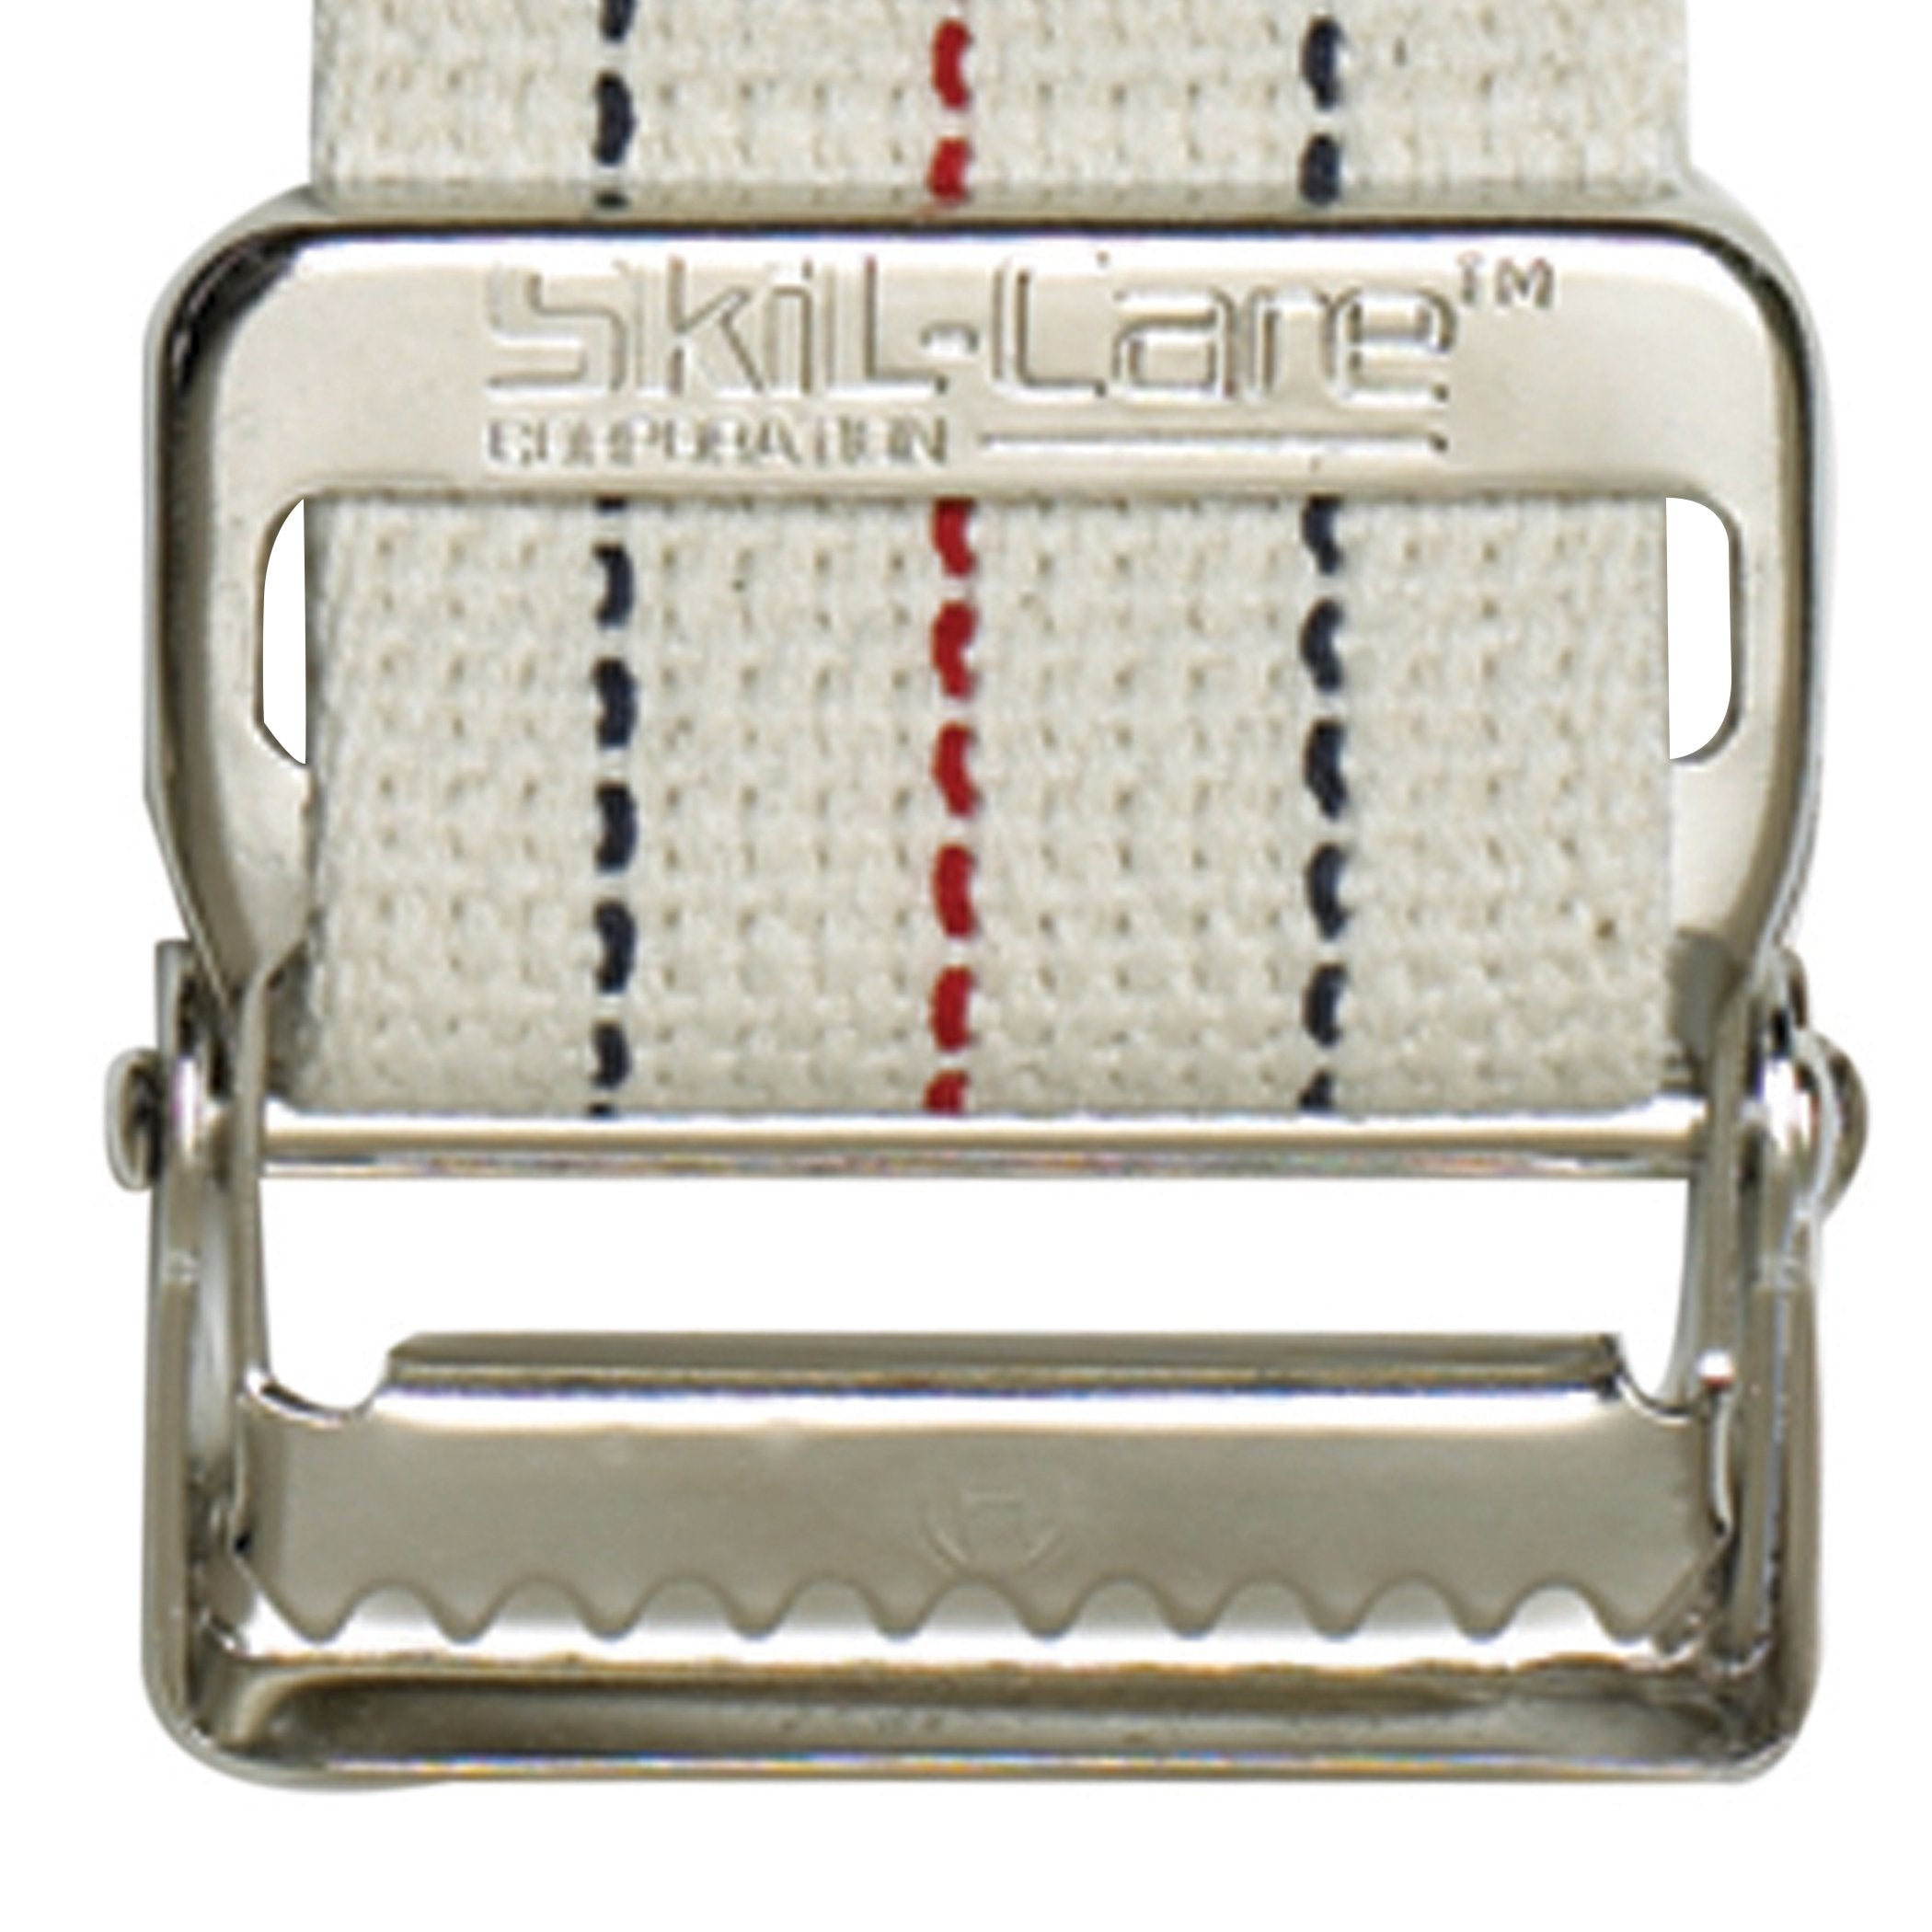 Gait Belt SkiL-Care 72 Inch Length Pinstripe Cotton